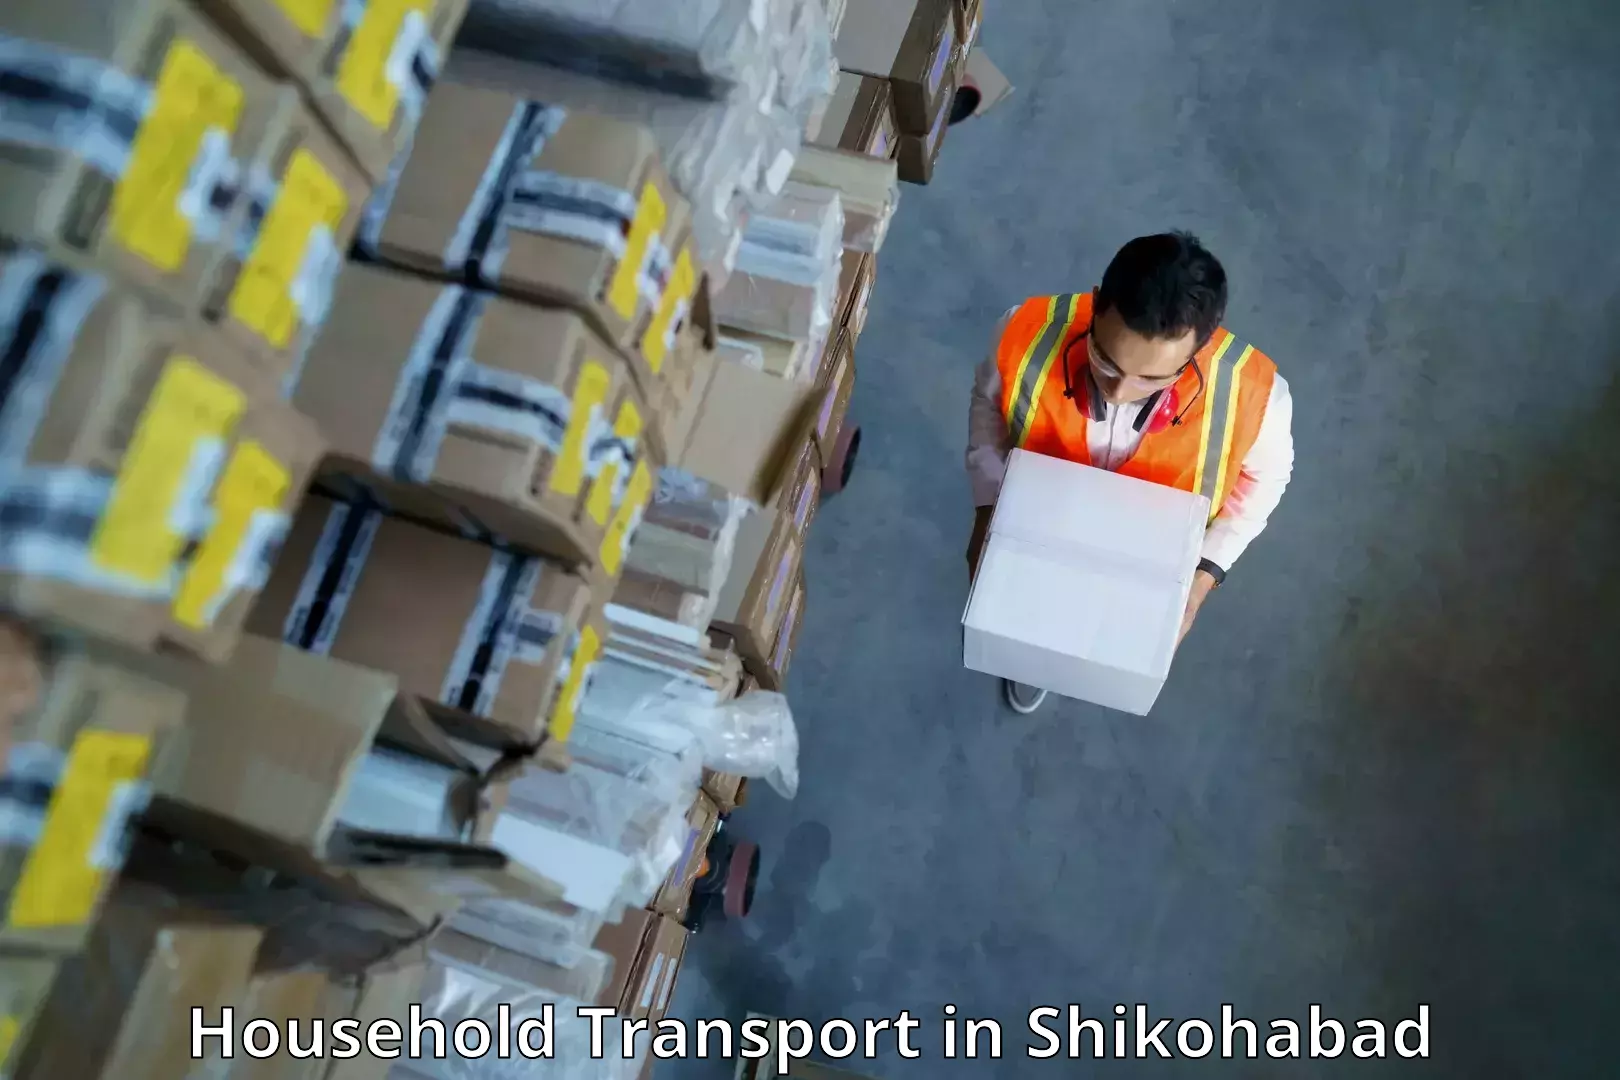 Household goods transporters in Shikohabad